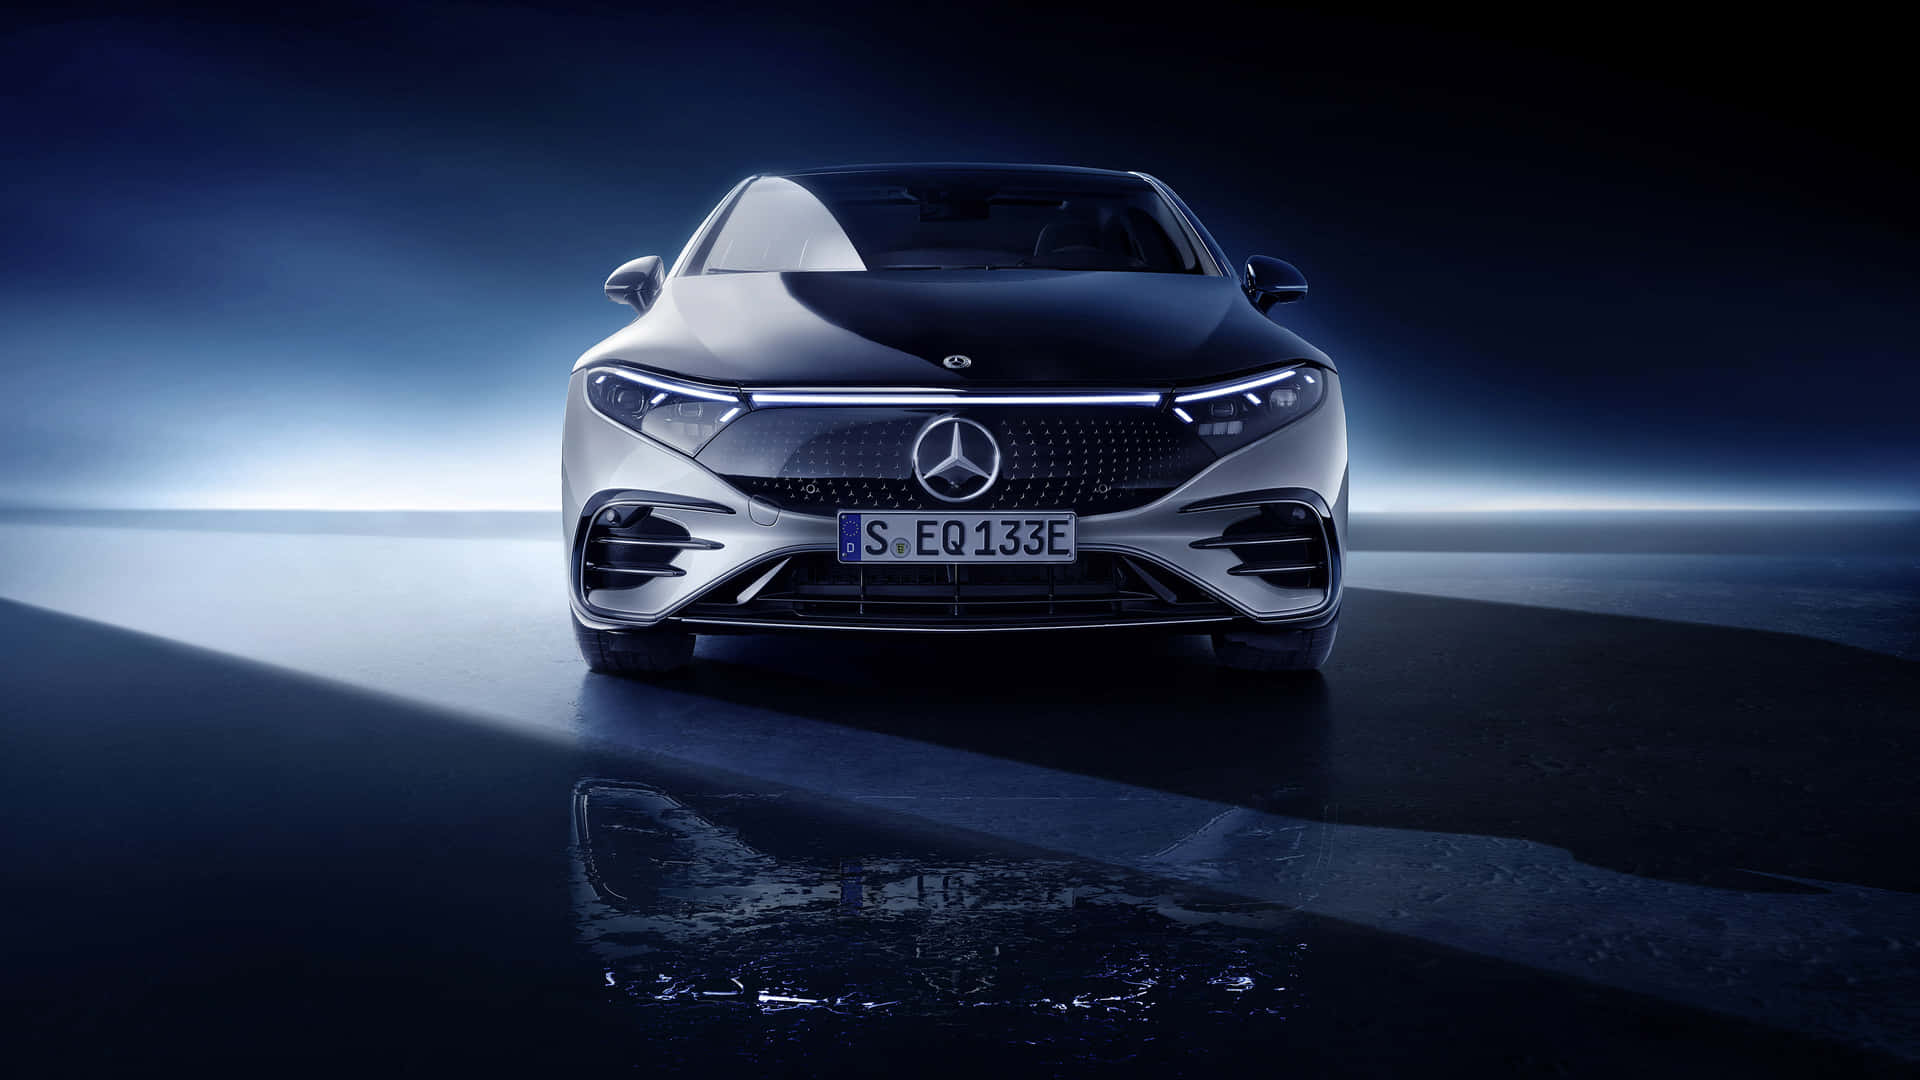 Mercedes E-class Car Spotlight 4k Wallpaper